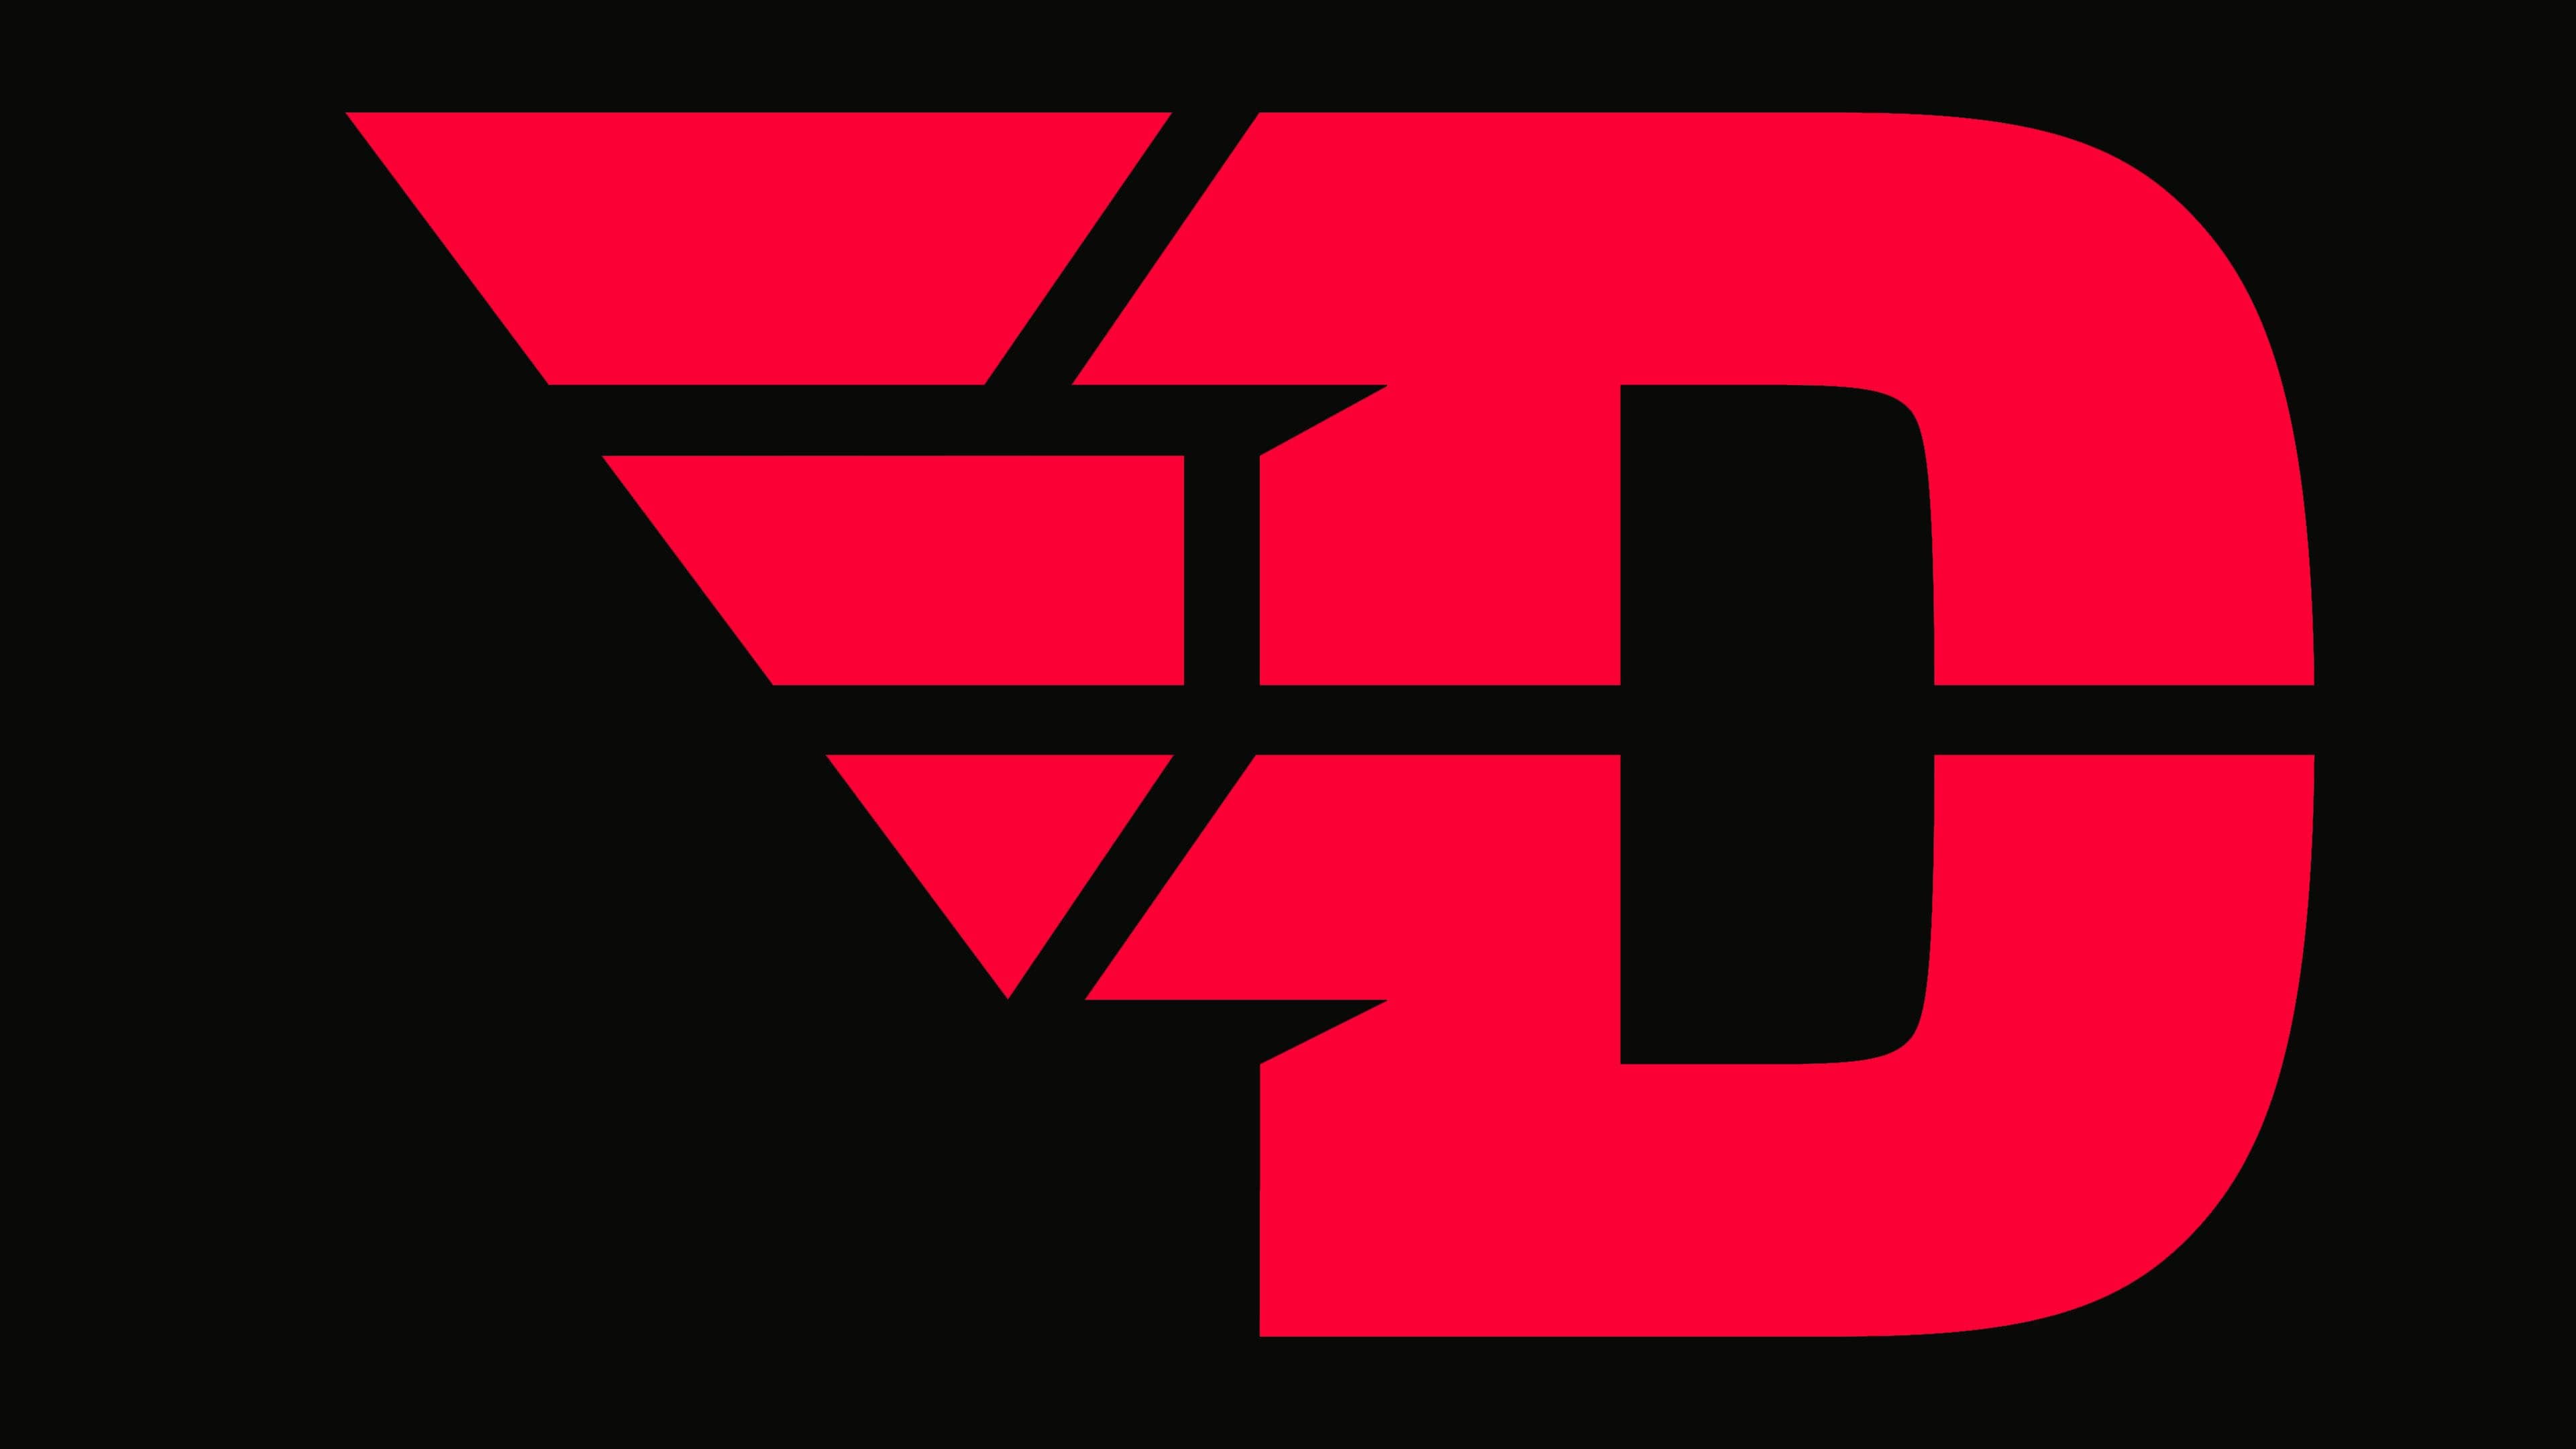 dayton-flyers-logo-symbol-meaning-history-png-brand